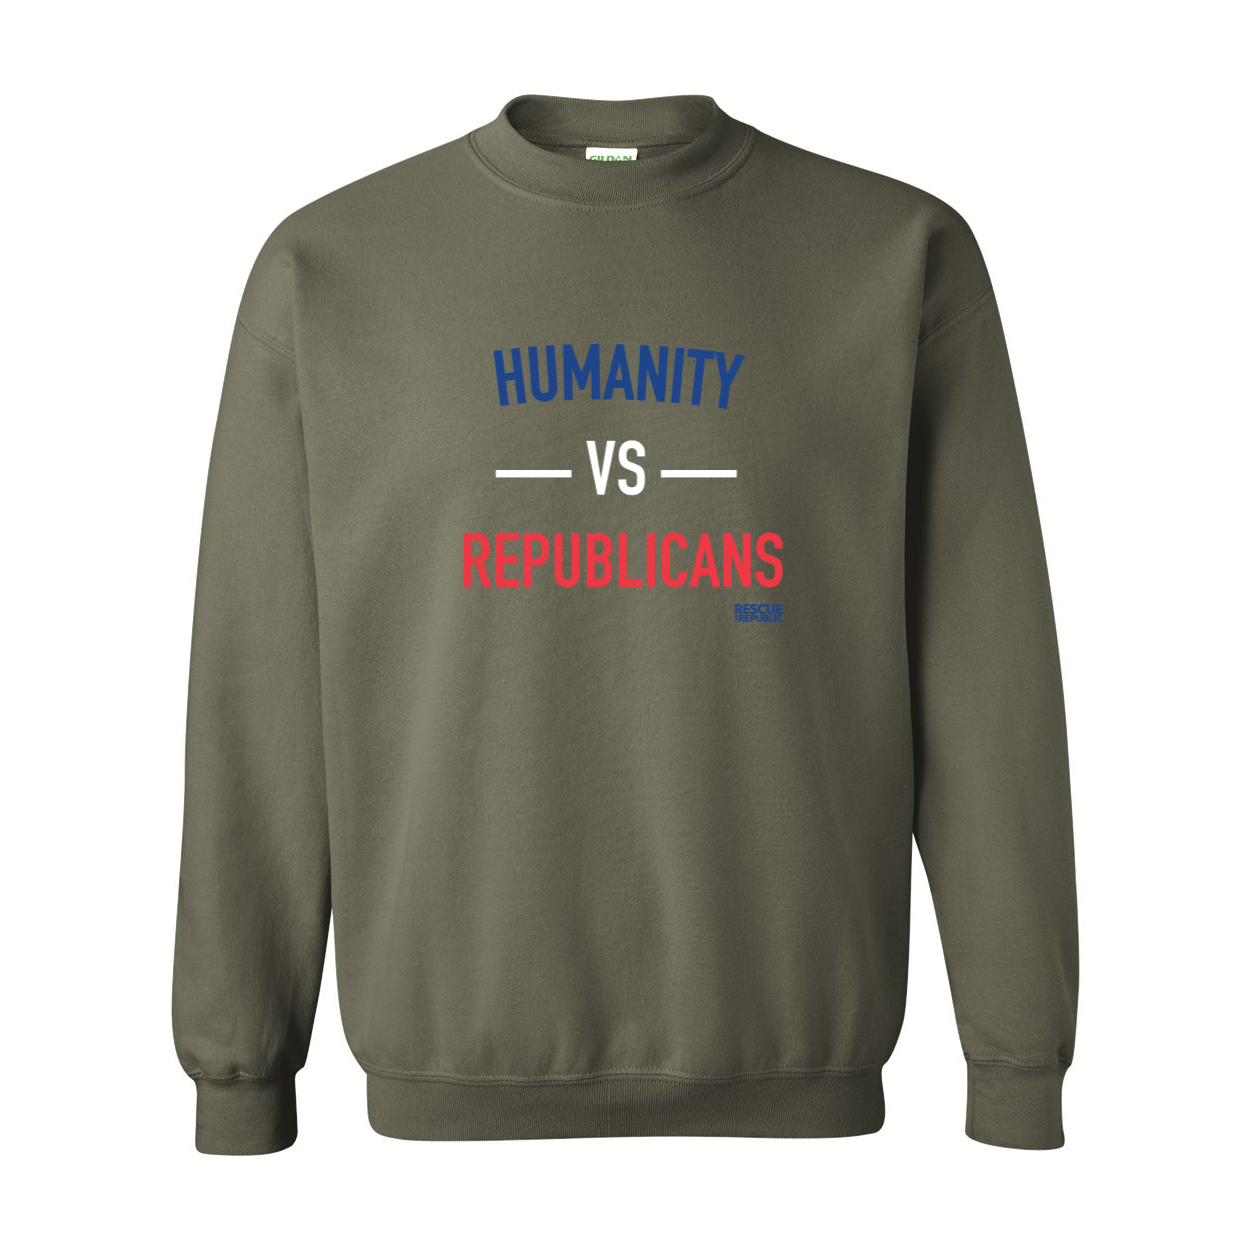 Humanity VS Republicans Crewneck Sweatshirt